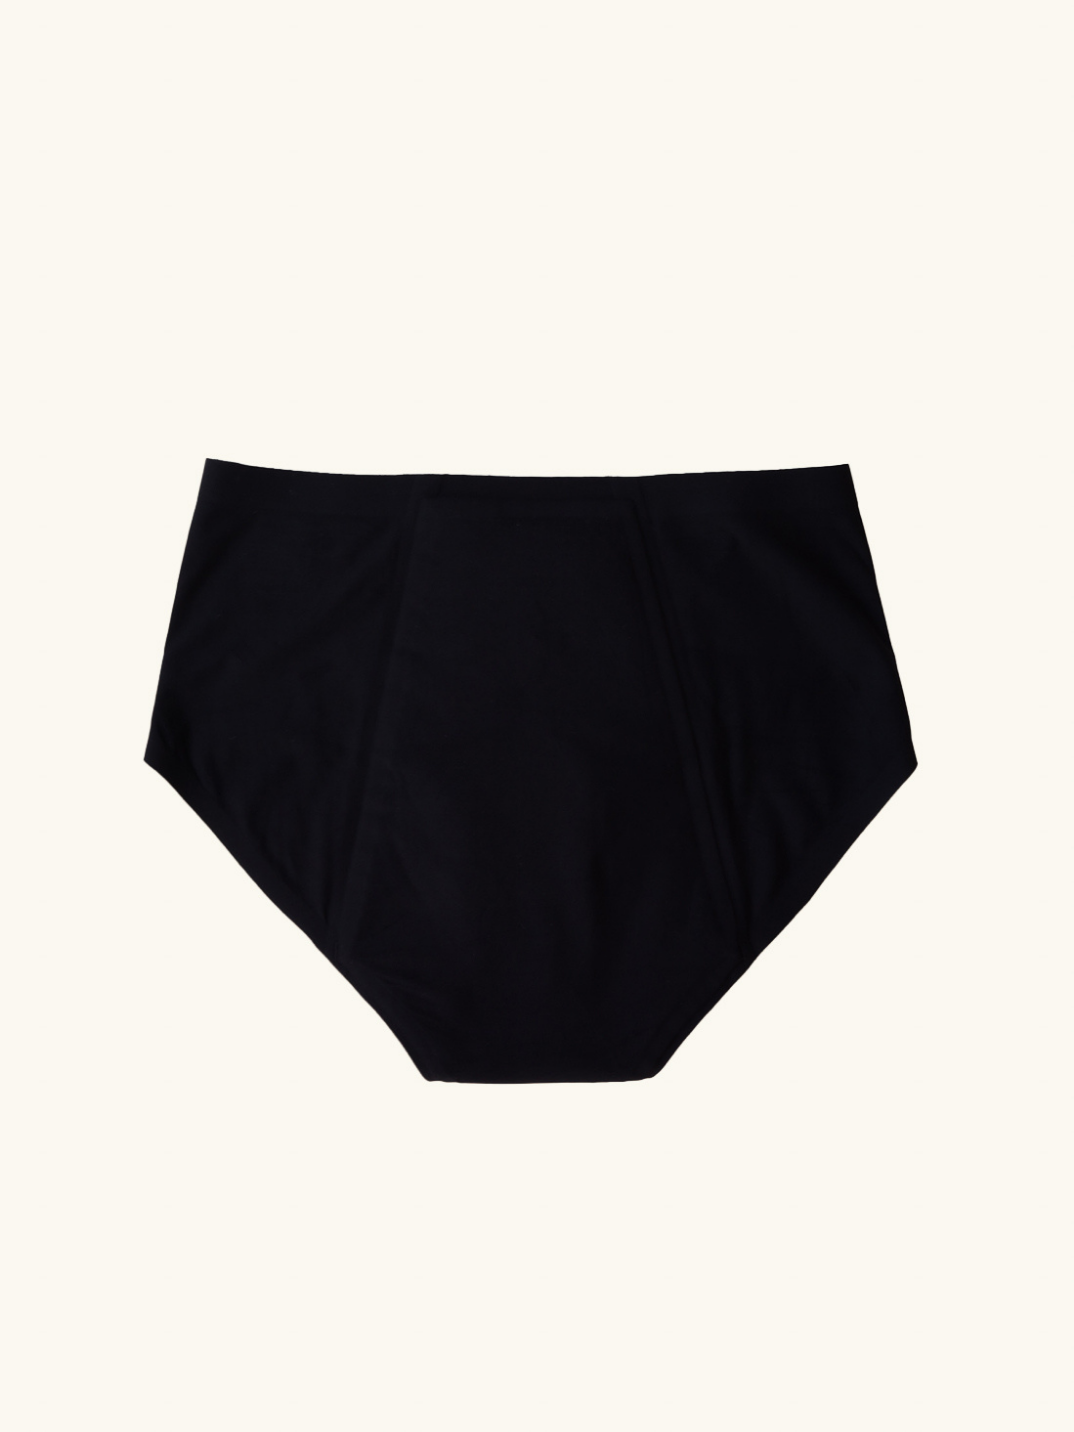 Kiri Daywear & Nightwear Panties Bundle Set